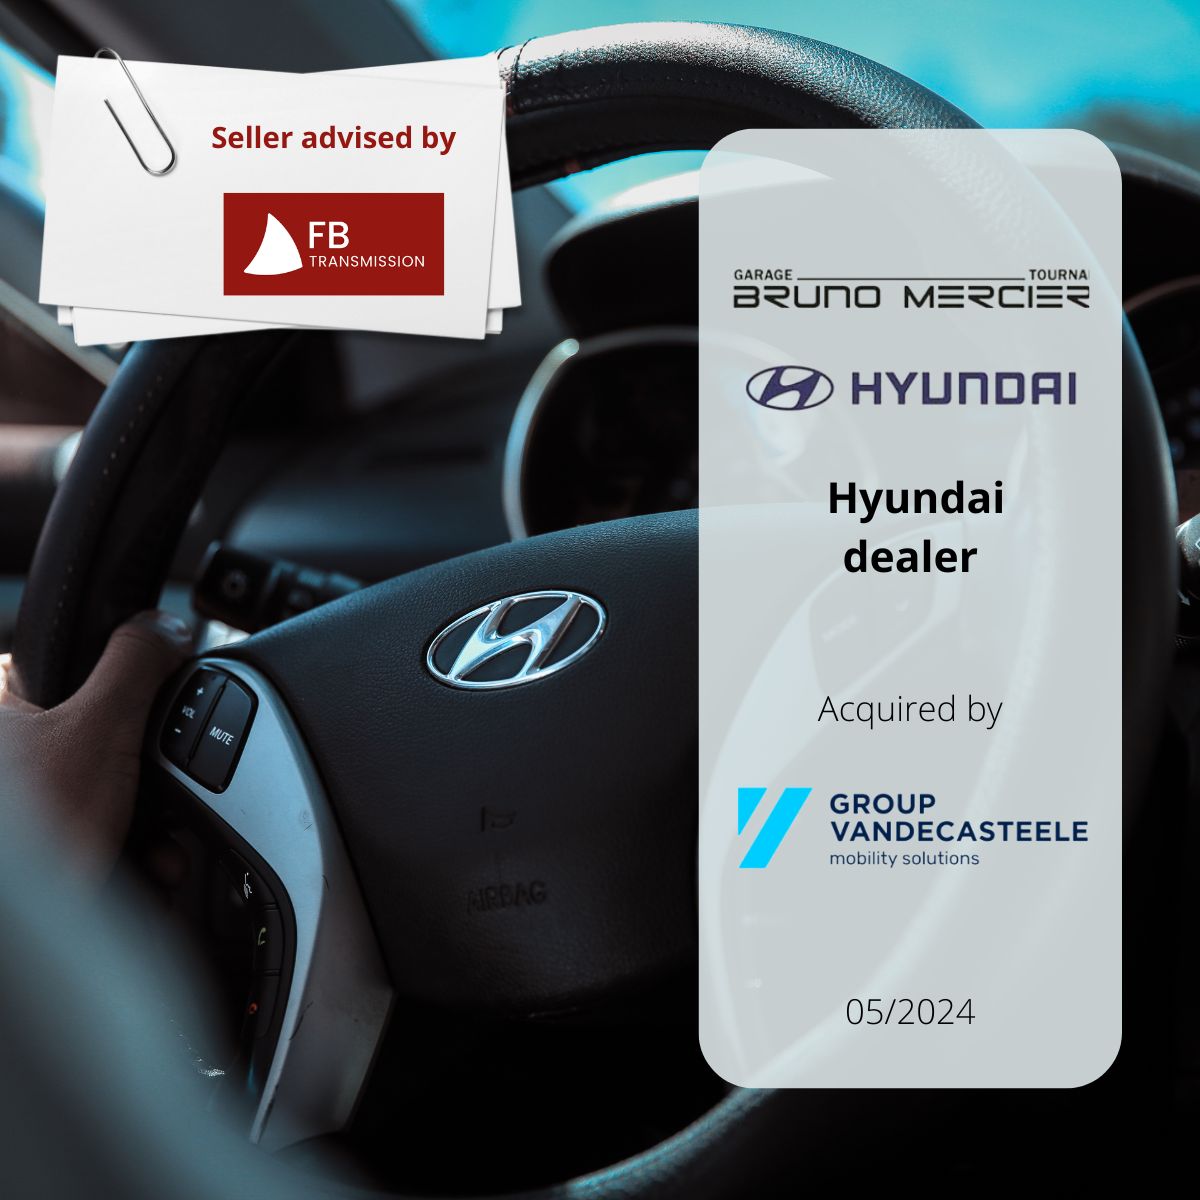 Garage Bruno Mercier – Concessionnaire Hyundai